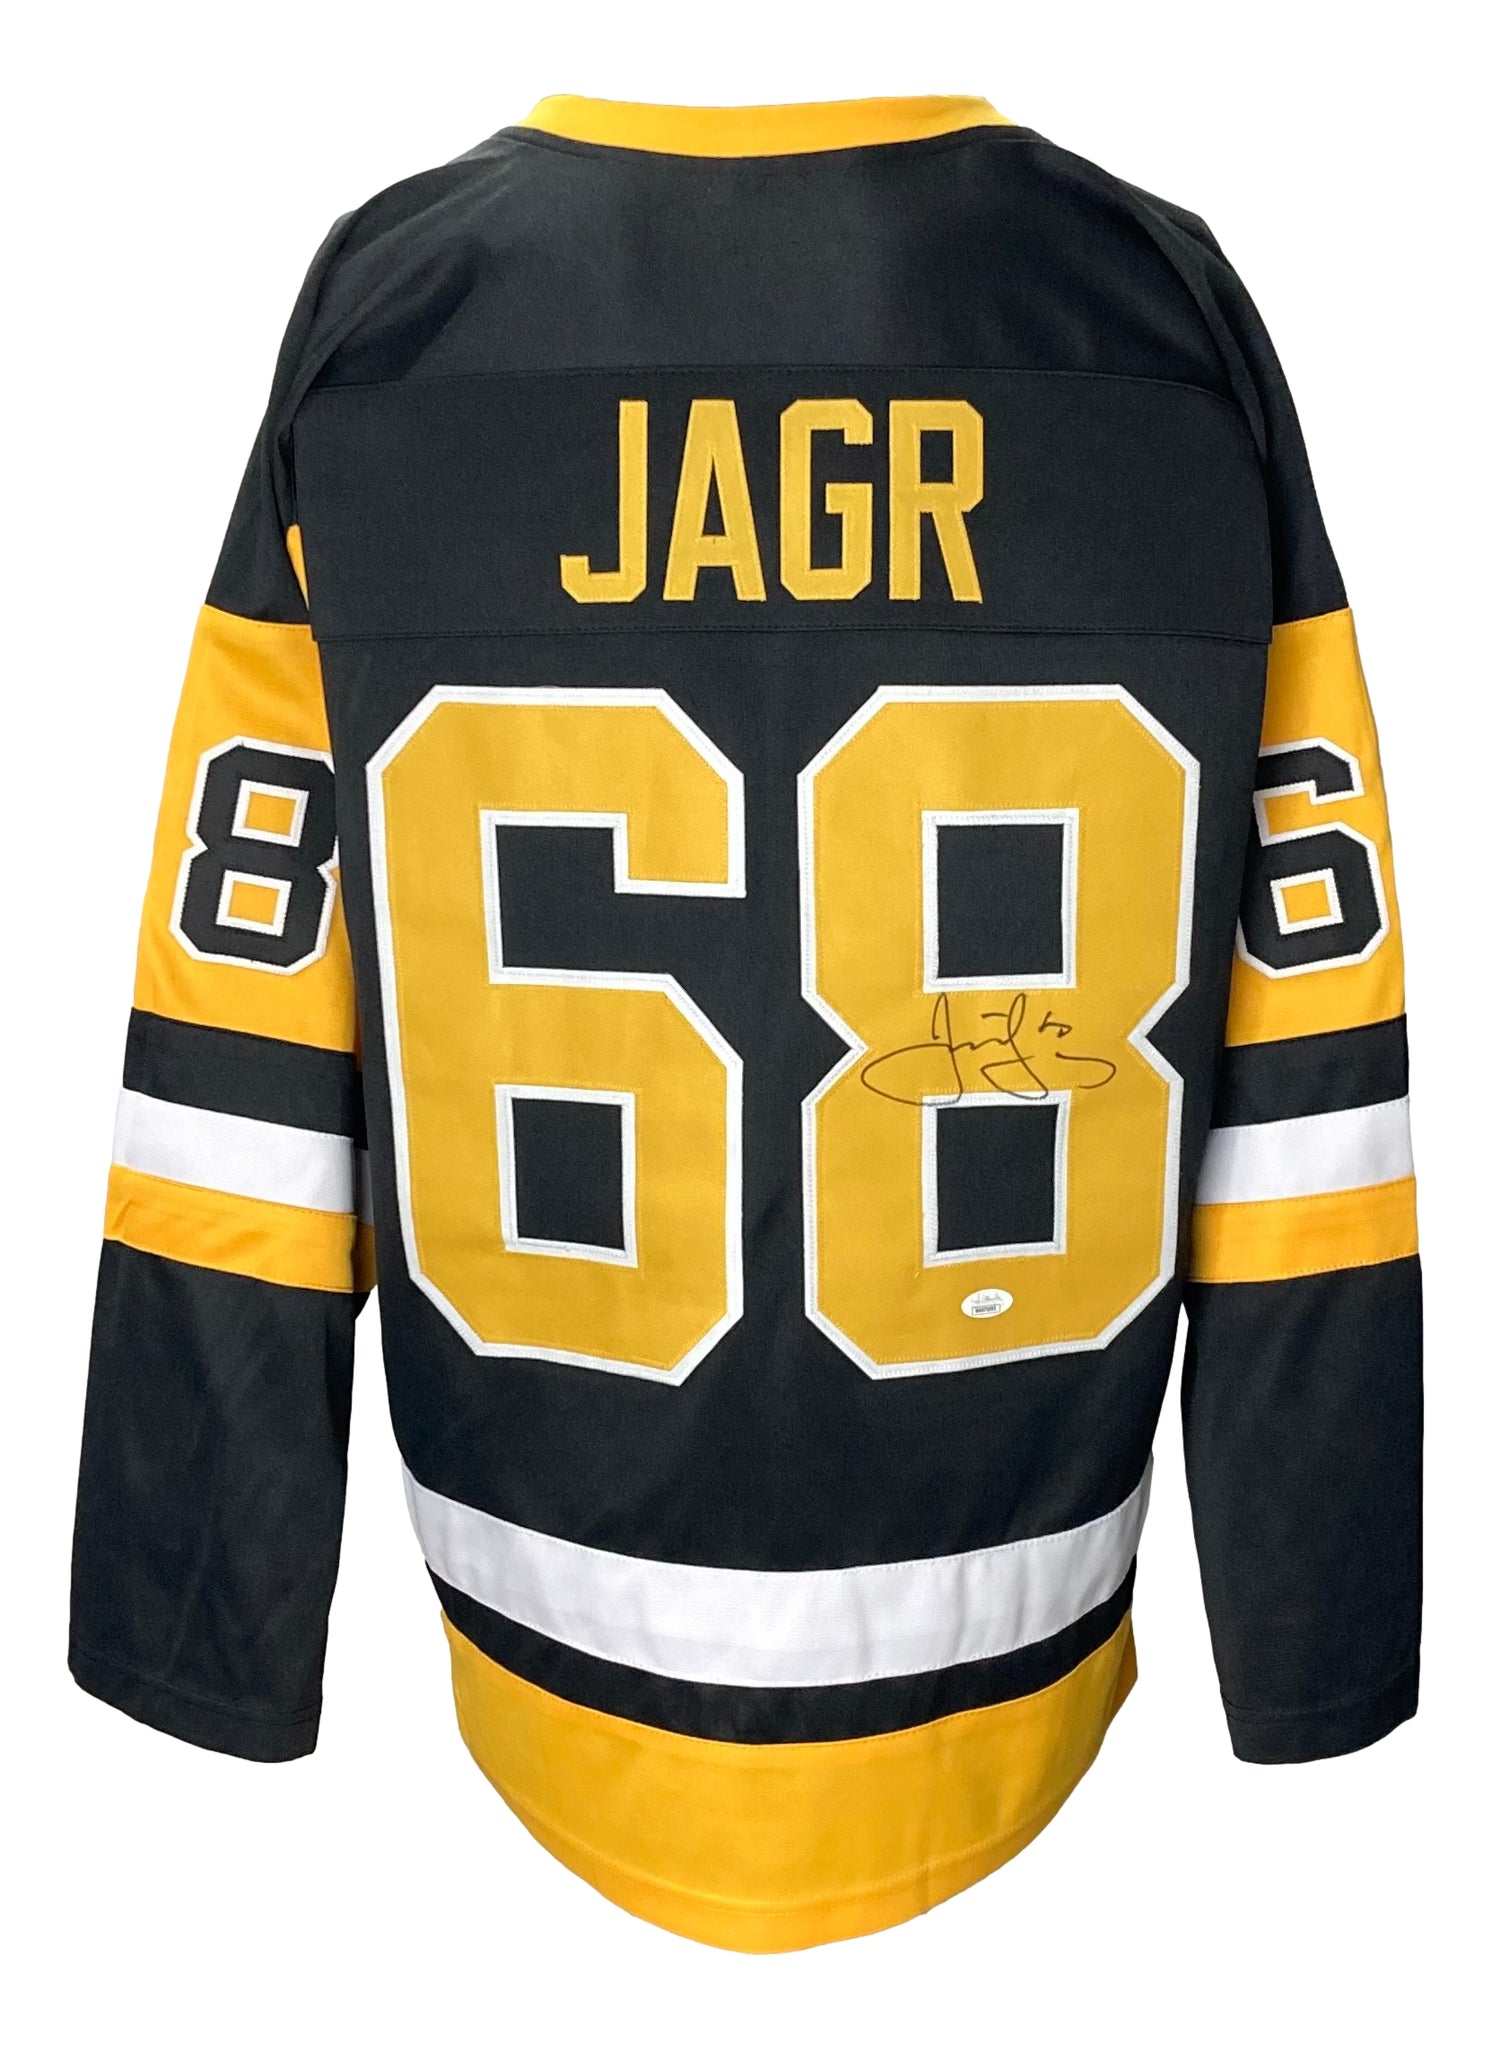 Autographed Jaromir Jagr Pittsburgh Penguins Hockey Puck JSA at